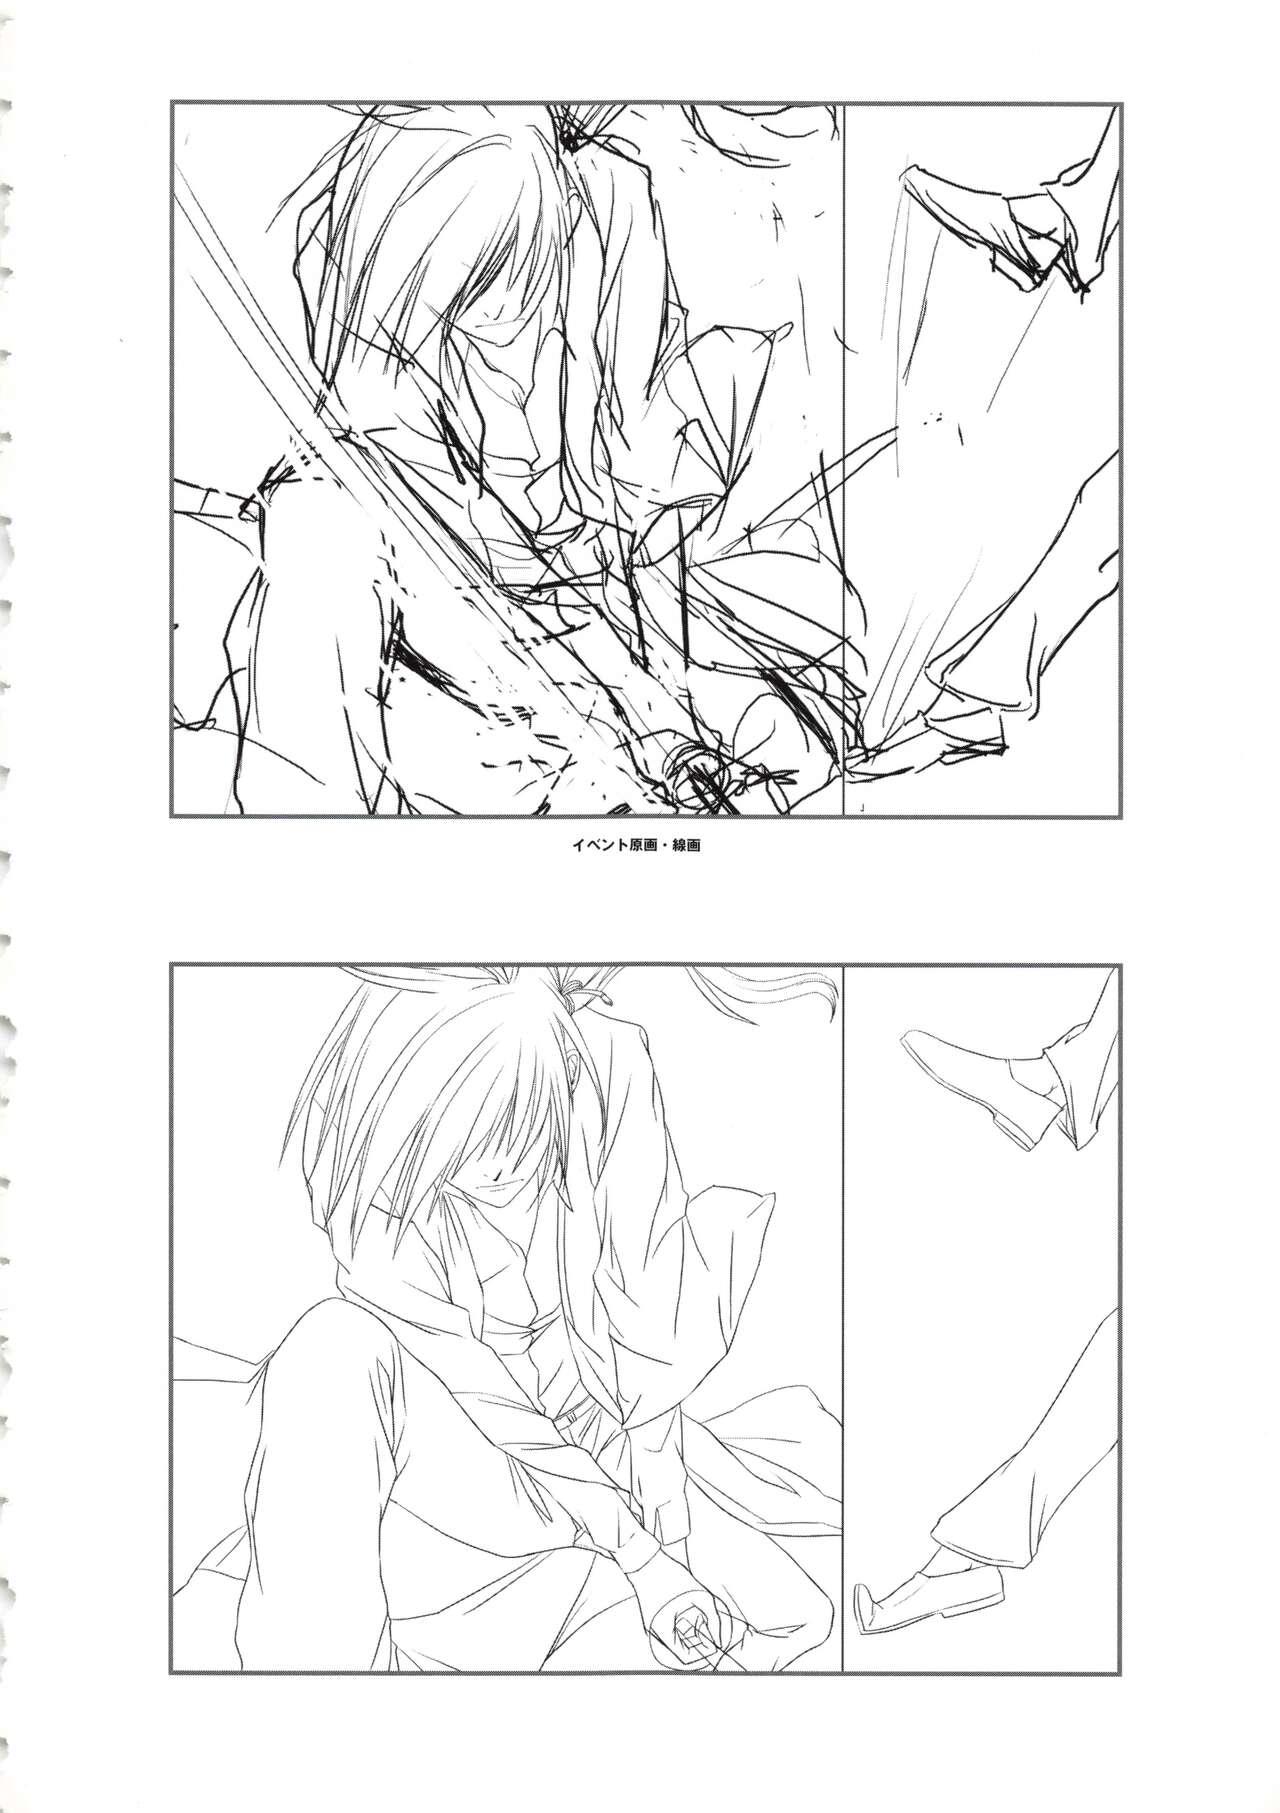 Hanachirasu - Initial Sketches and Unprocessed Illustrations - Selection 28